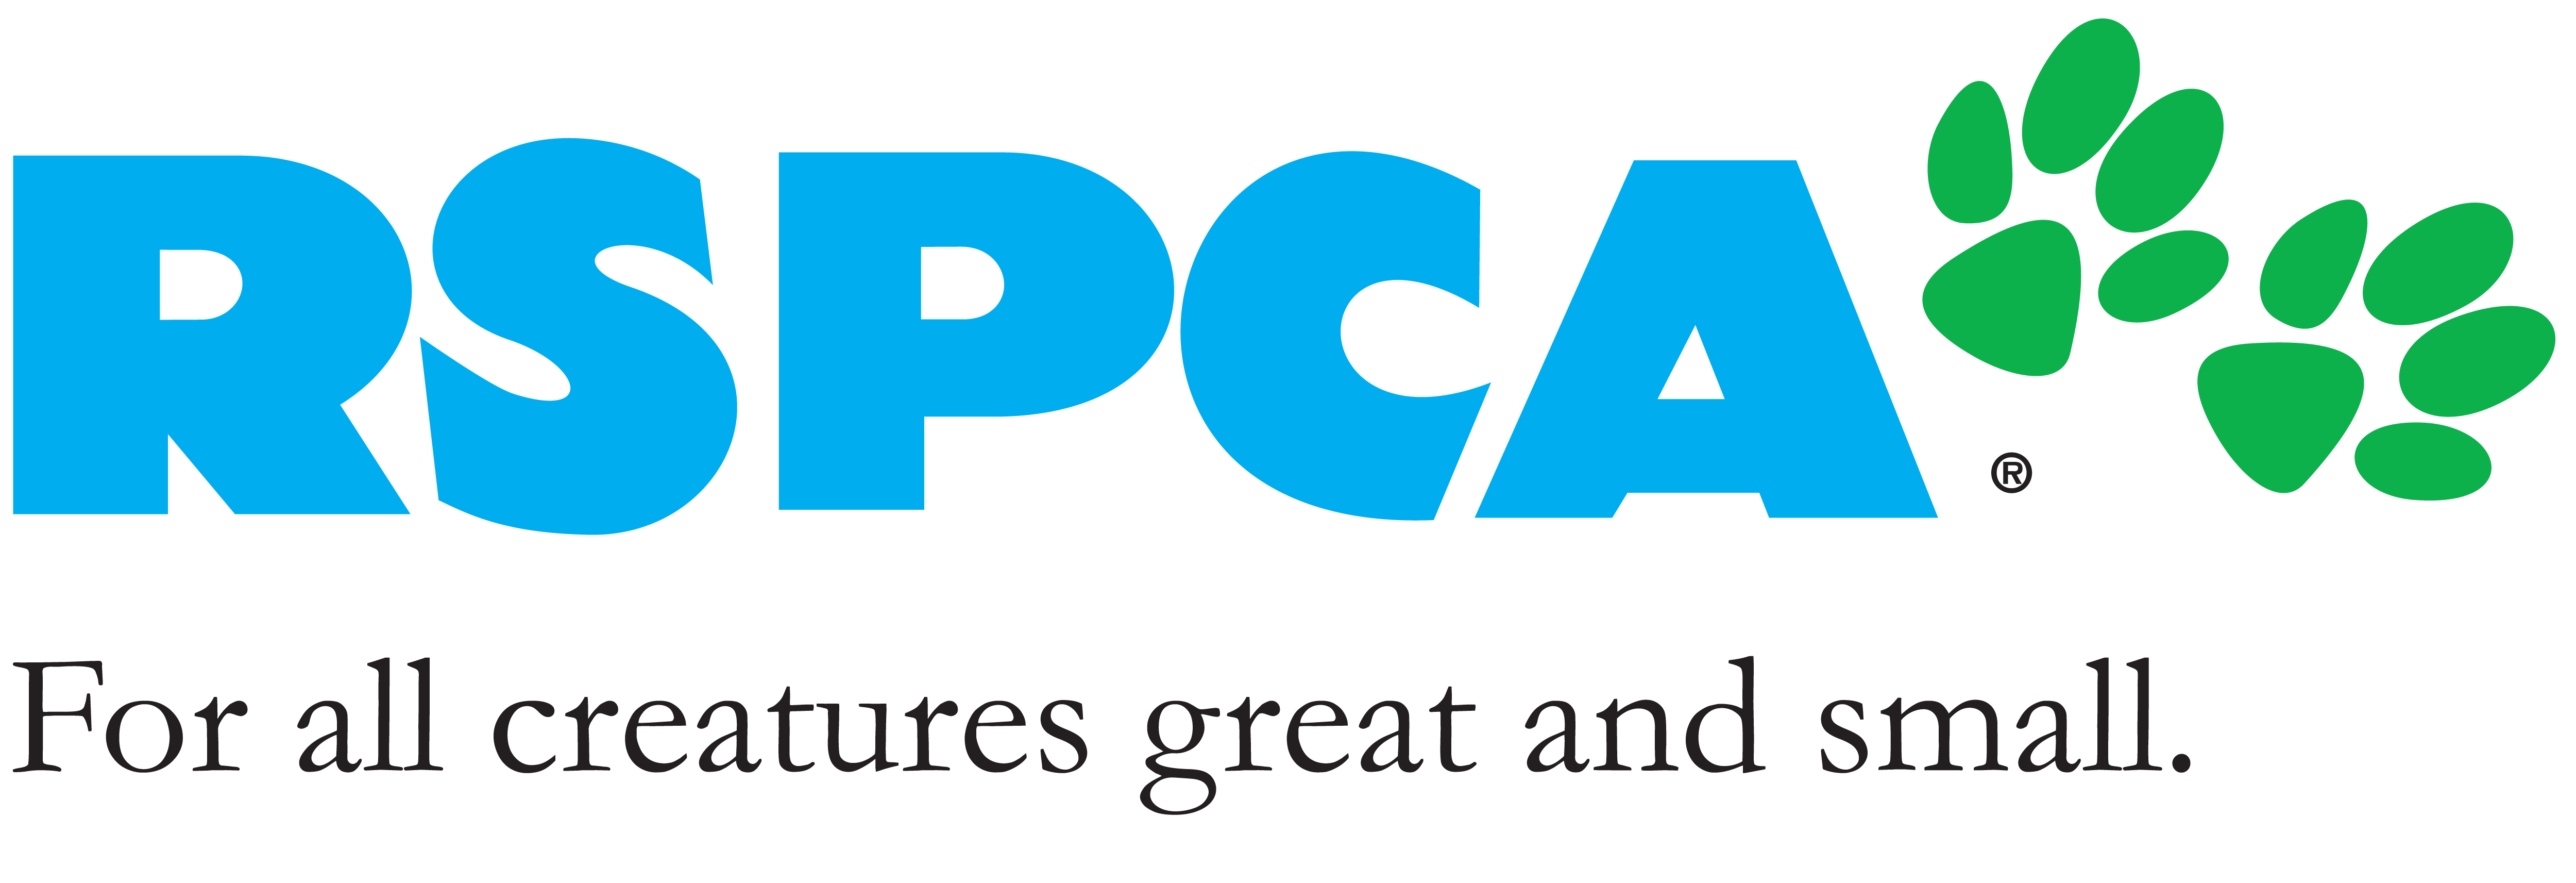 Rspca Logo PNG - 175453